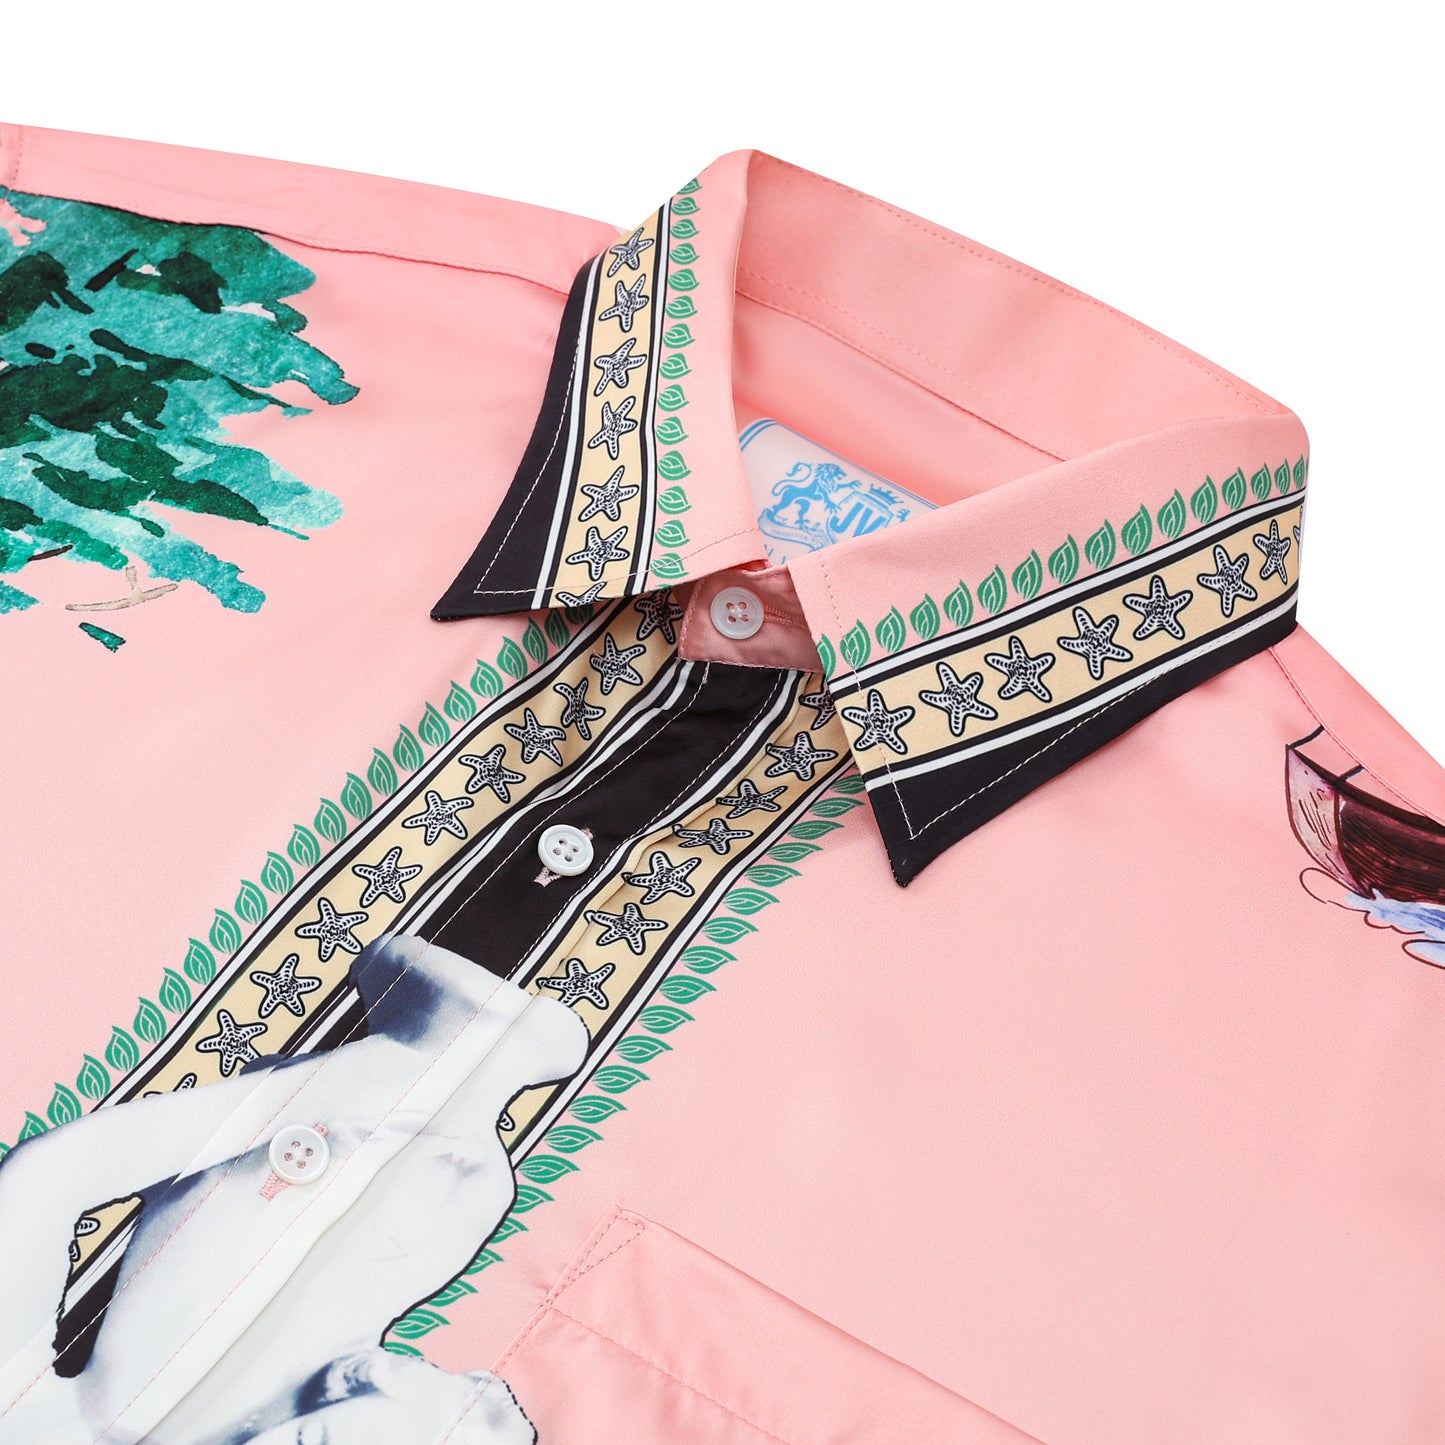 Pink Goddess Statue Pattern Button Up Casual Shirt